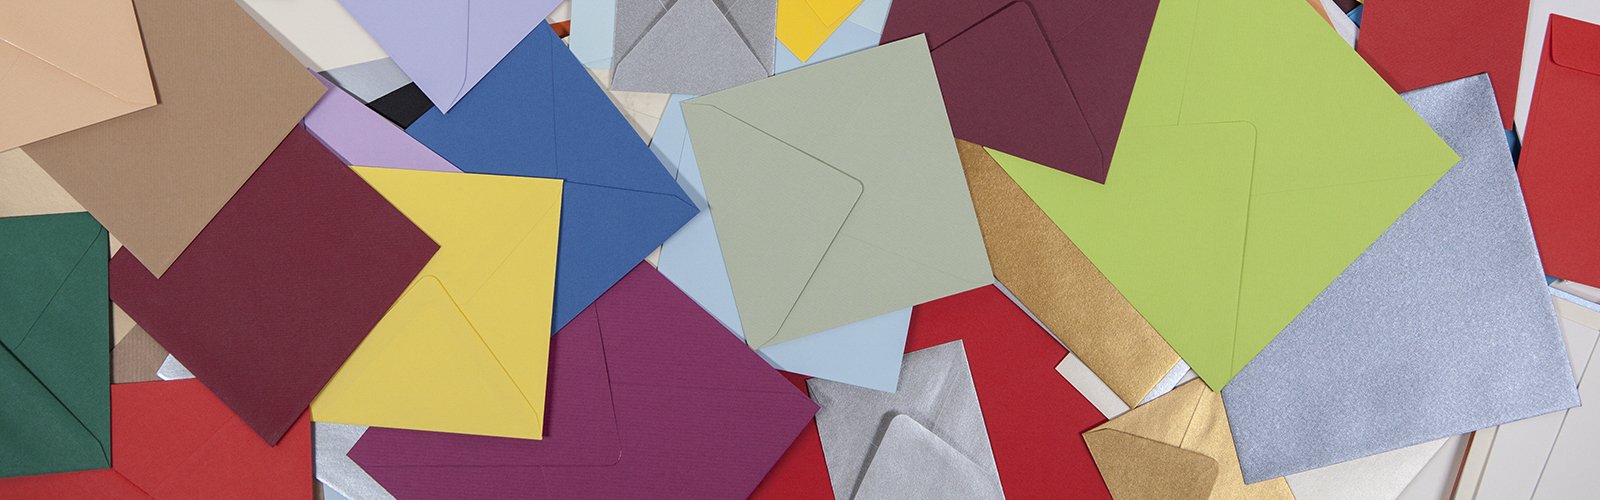 Farbige quadratische Kuverts